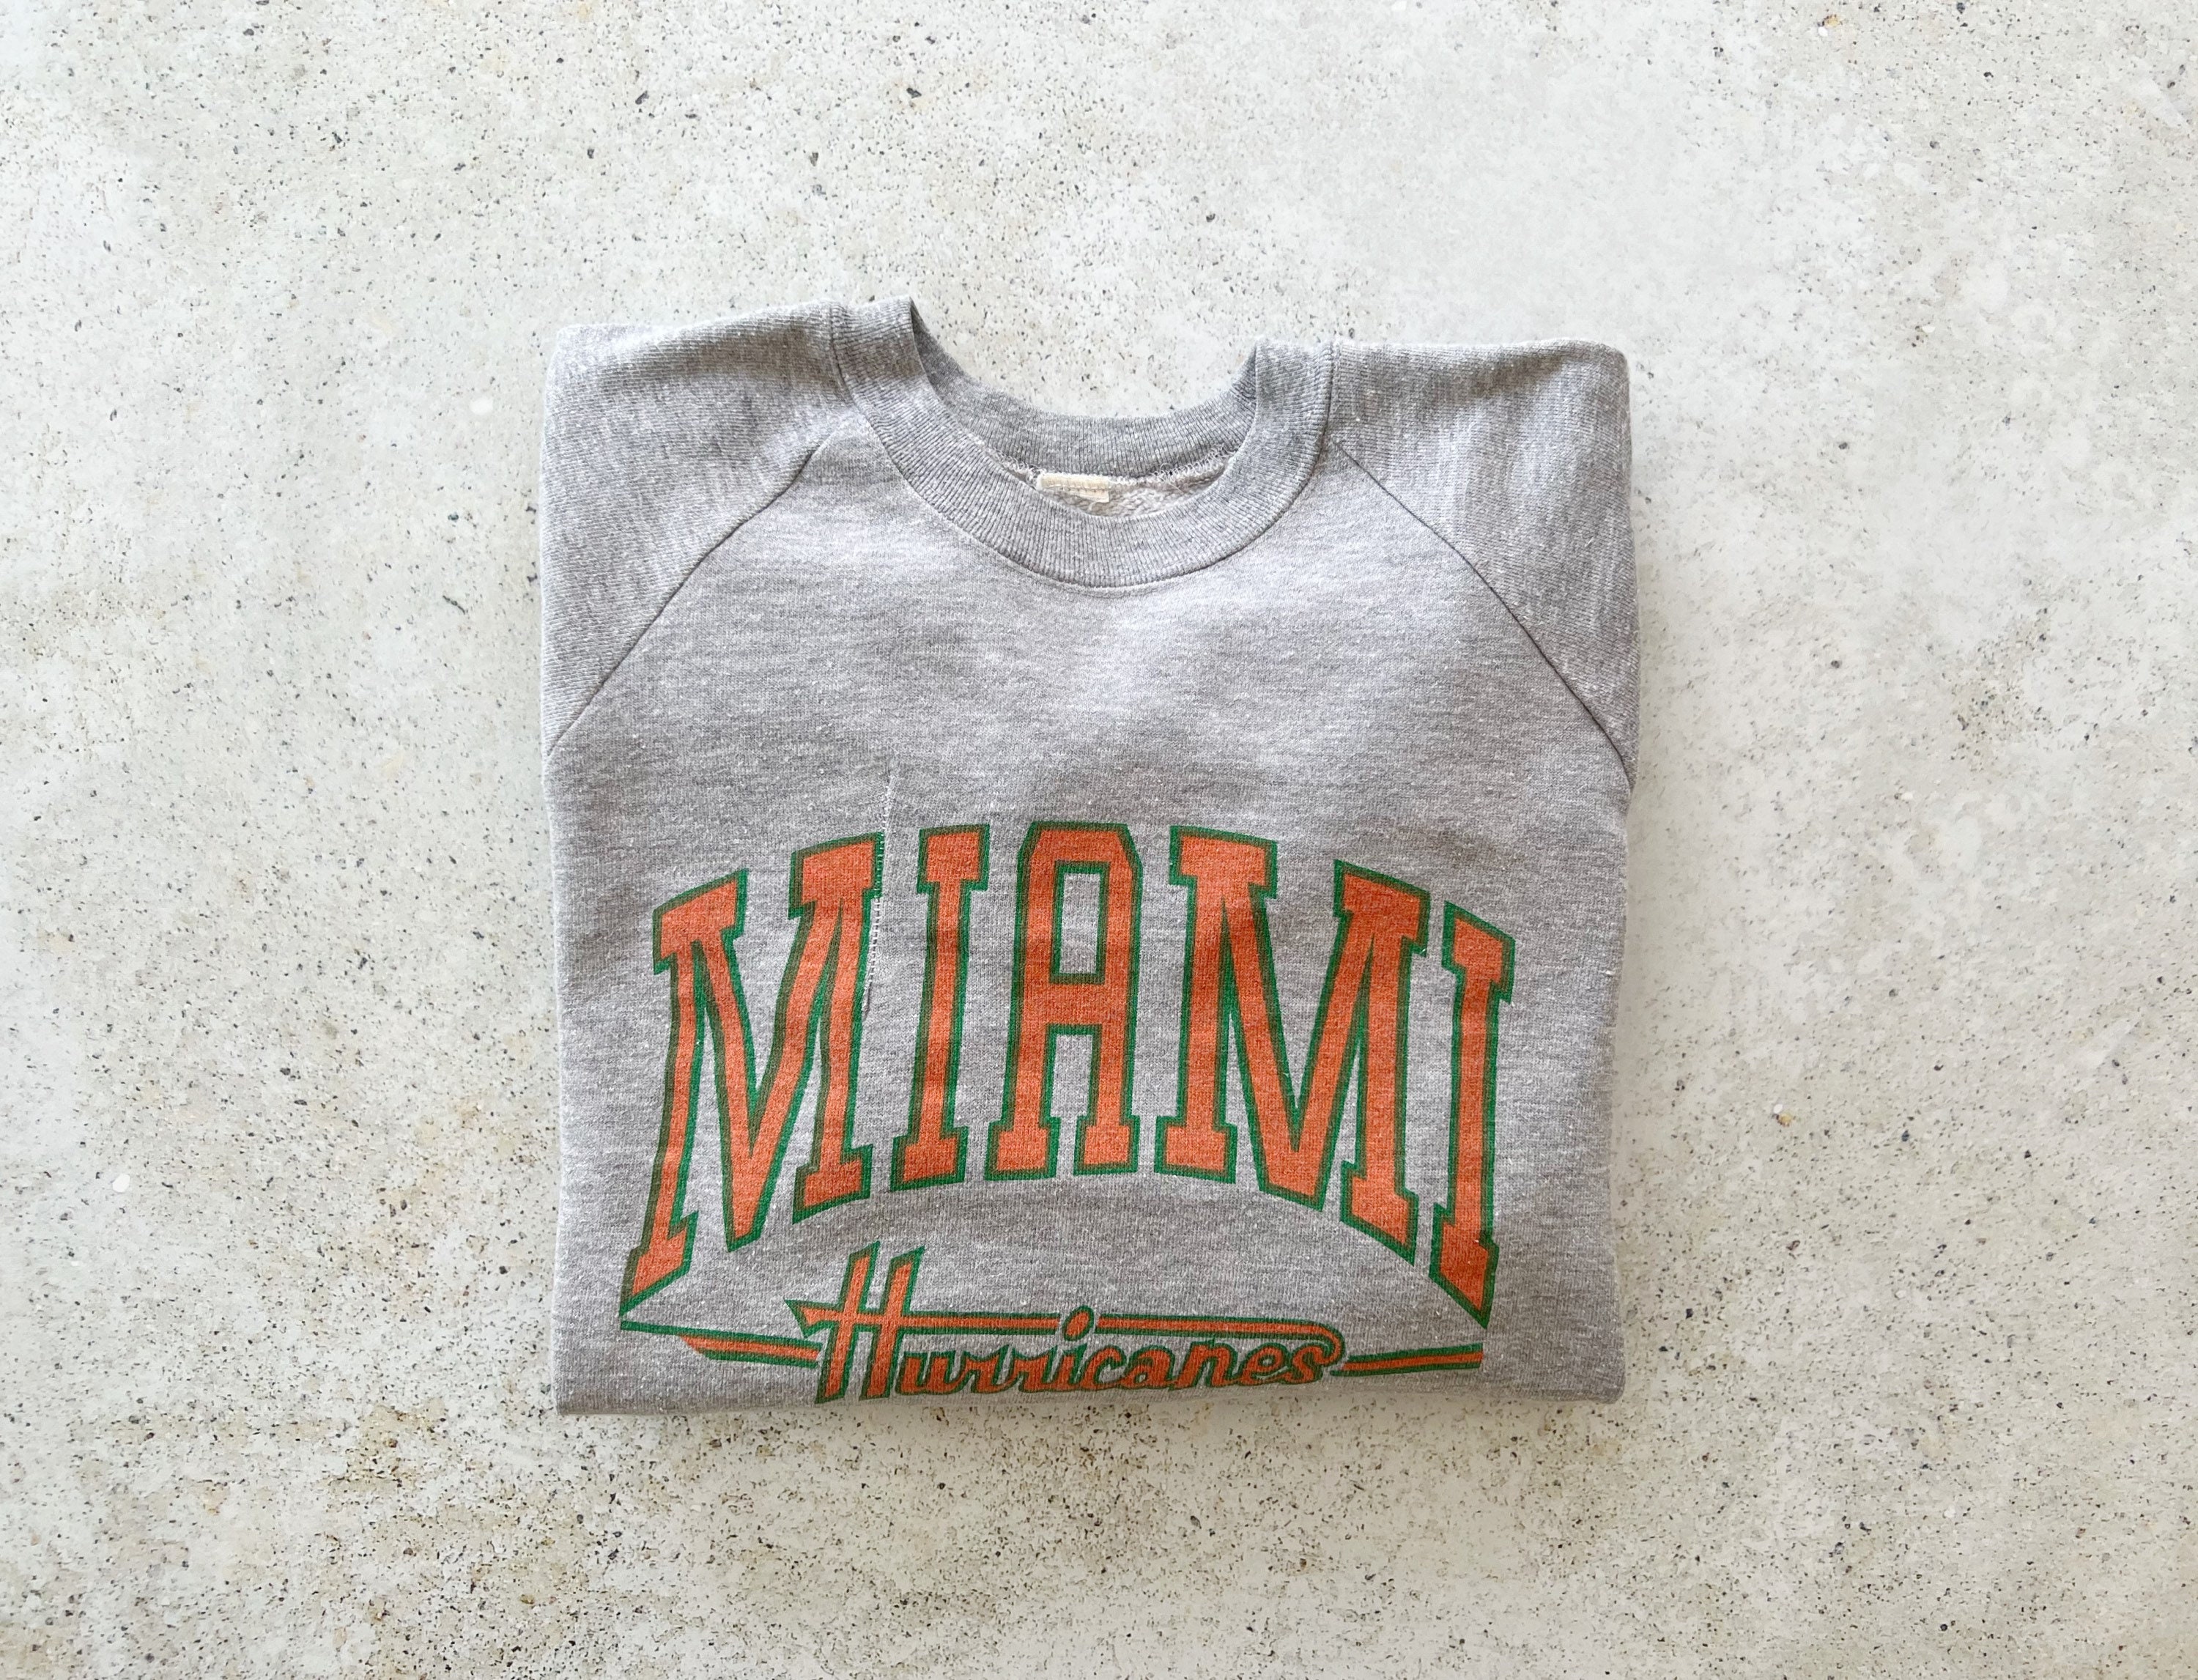 Vintage Miami Hurricanes Apparel: Shirts and Sweatshirts